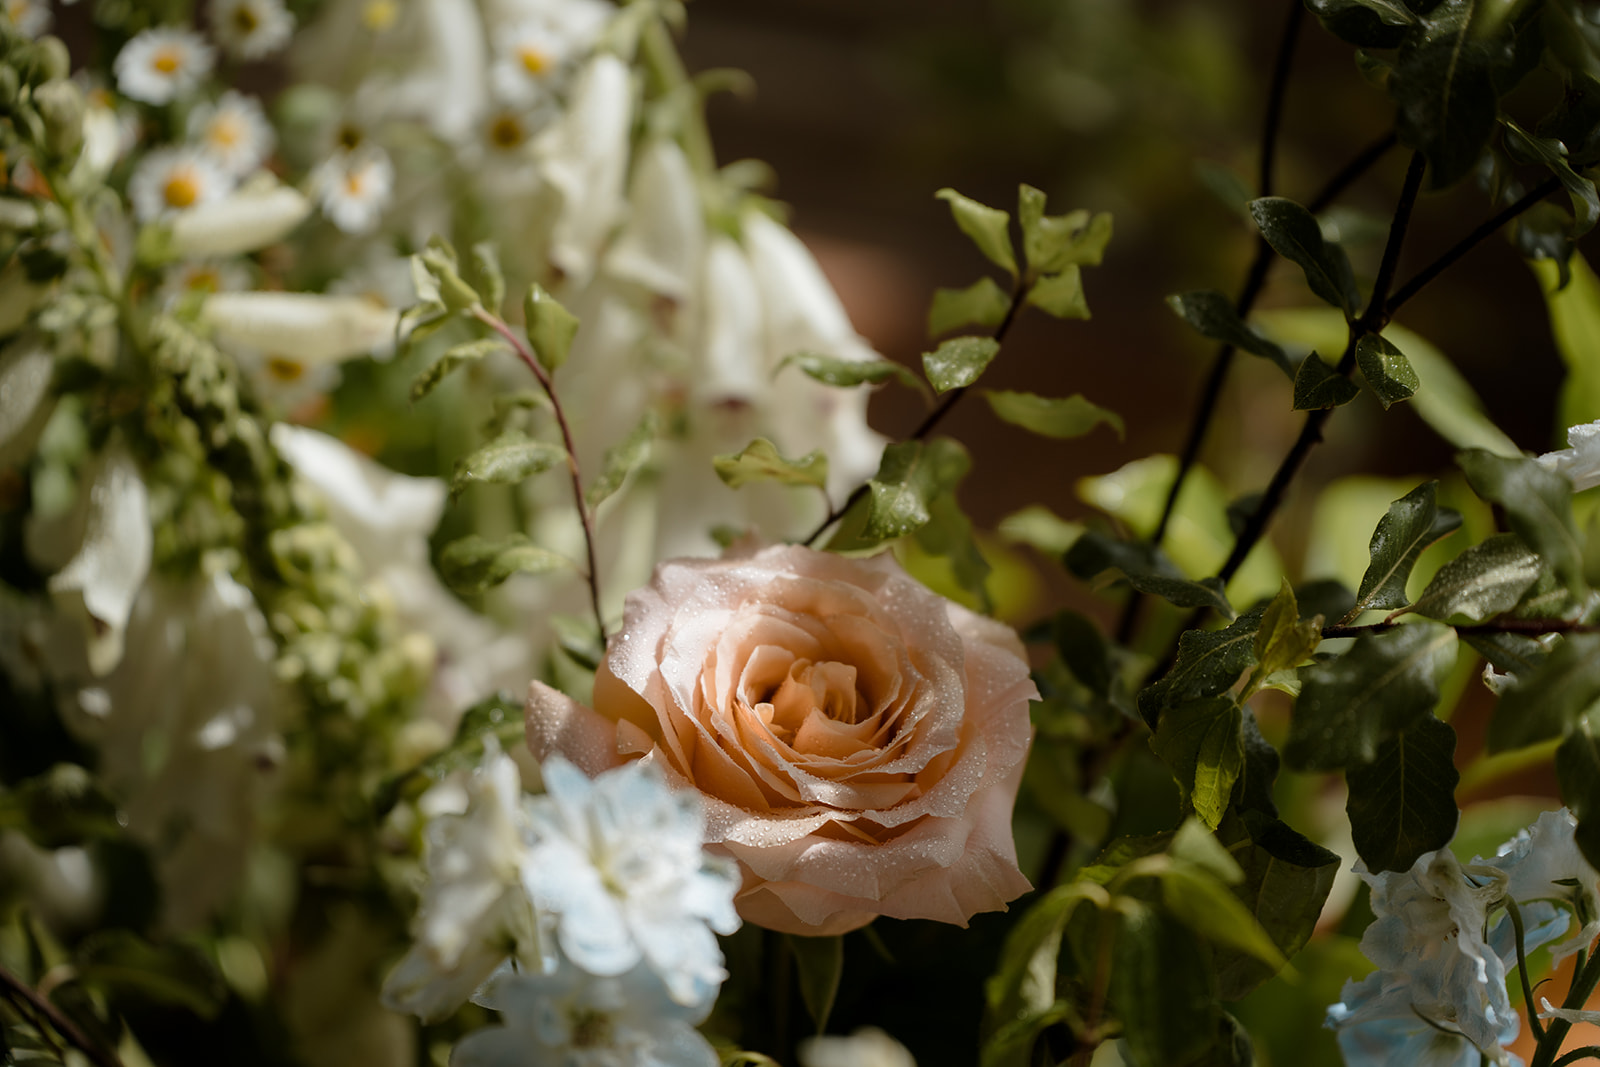 Mesmerizing rose decoration at Montsalvat, Victoria, adding elegance to a wedding ceremony